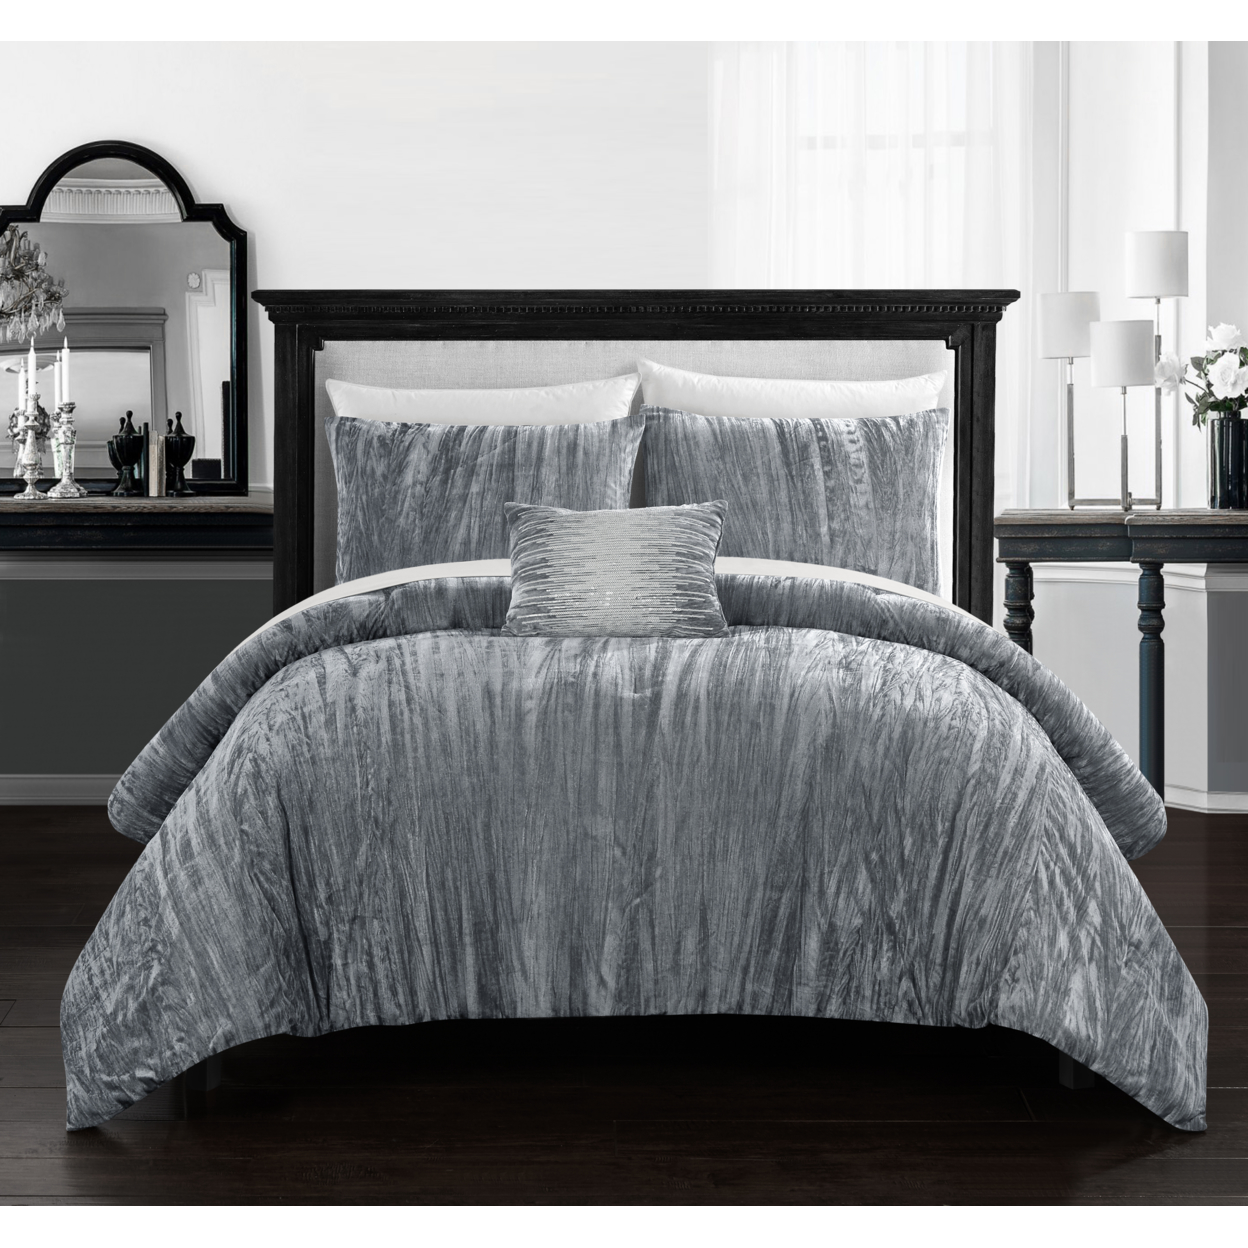 Merieta 4 Piece Comforter Set Crinkle Crushed Velvet Bedding - Decorative Pillow Shams Included - Grey, King